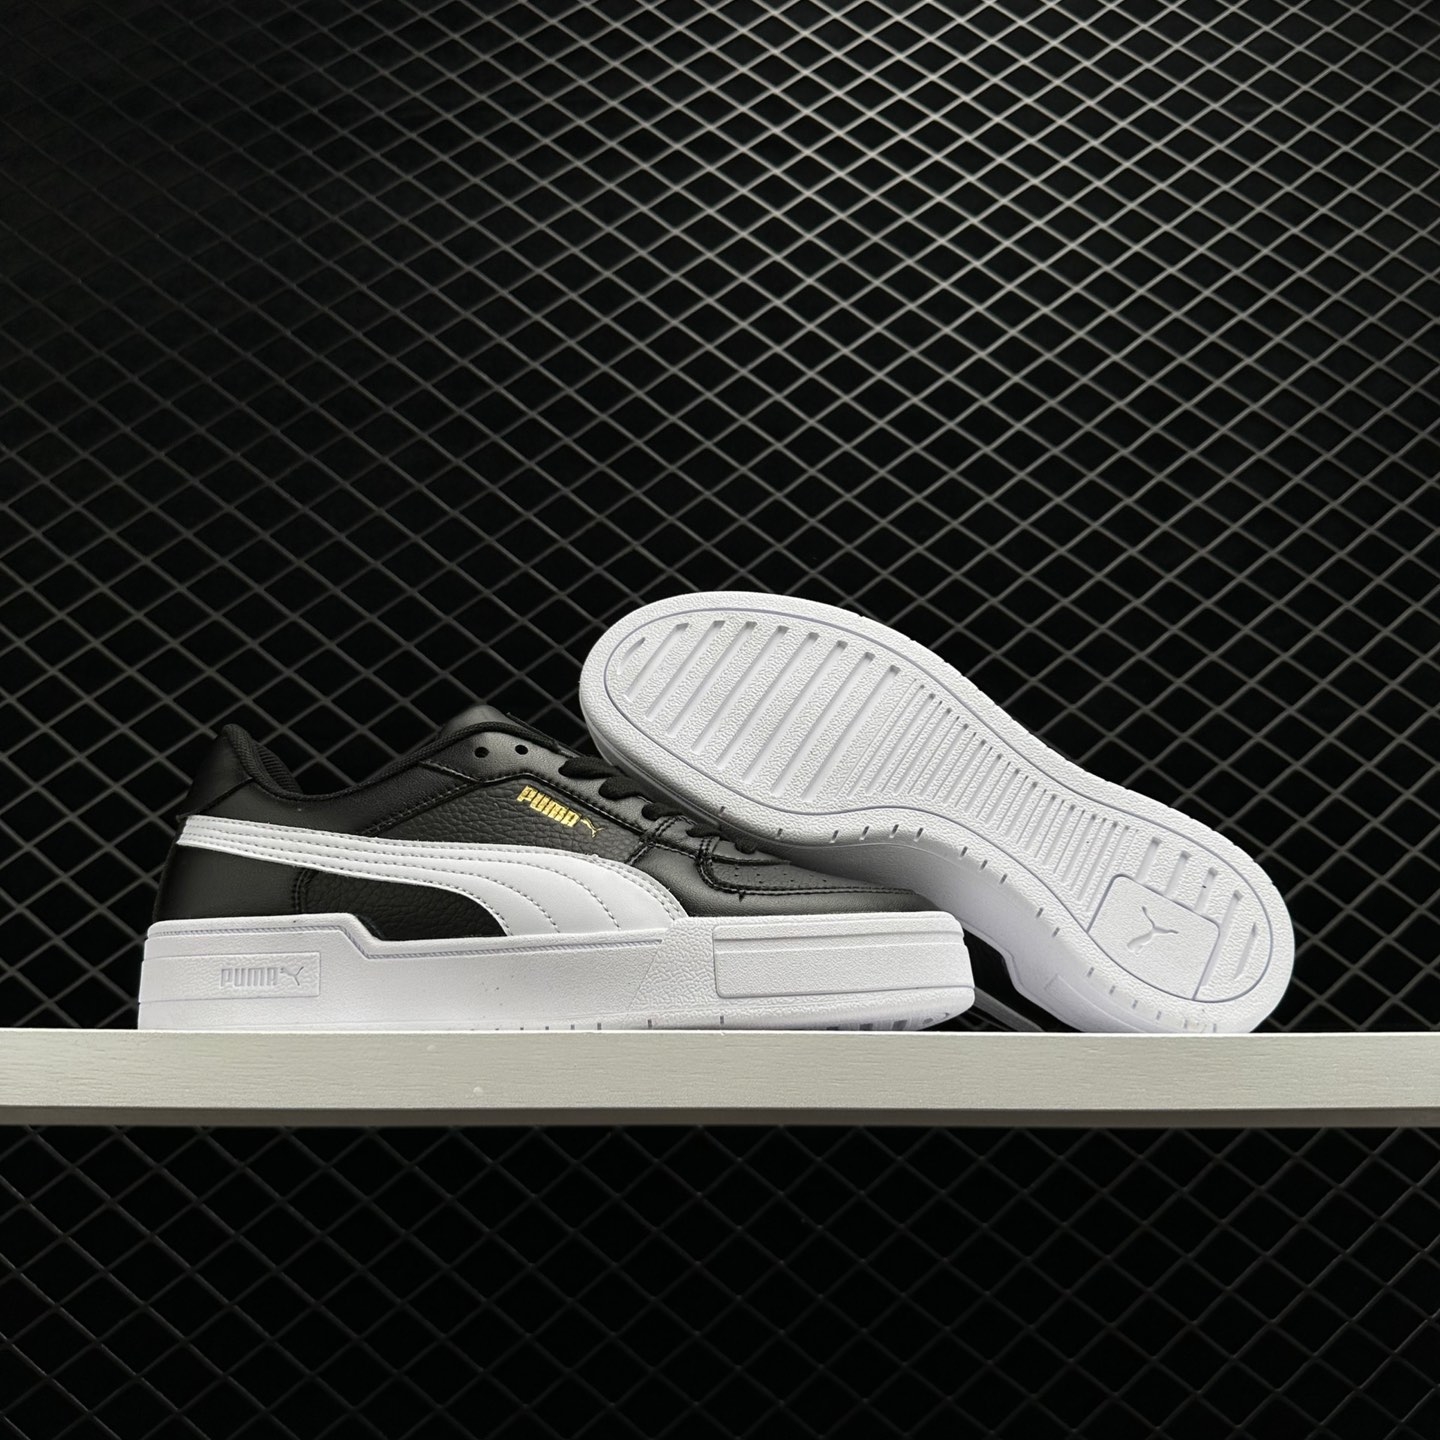 PUMA Ca Pro Classic Gold Black White Gold 380190-05 - Stylish and Versatile Sneakers